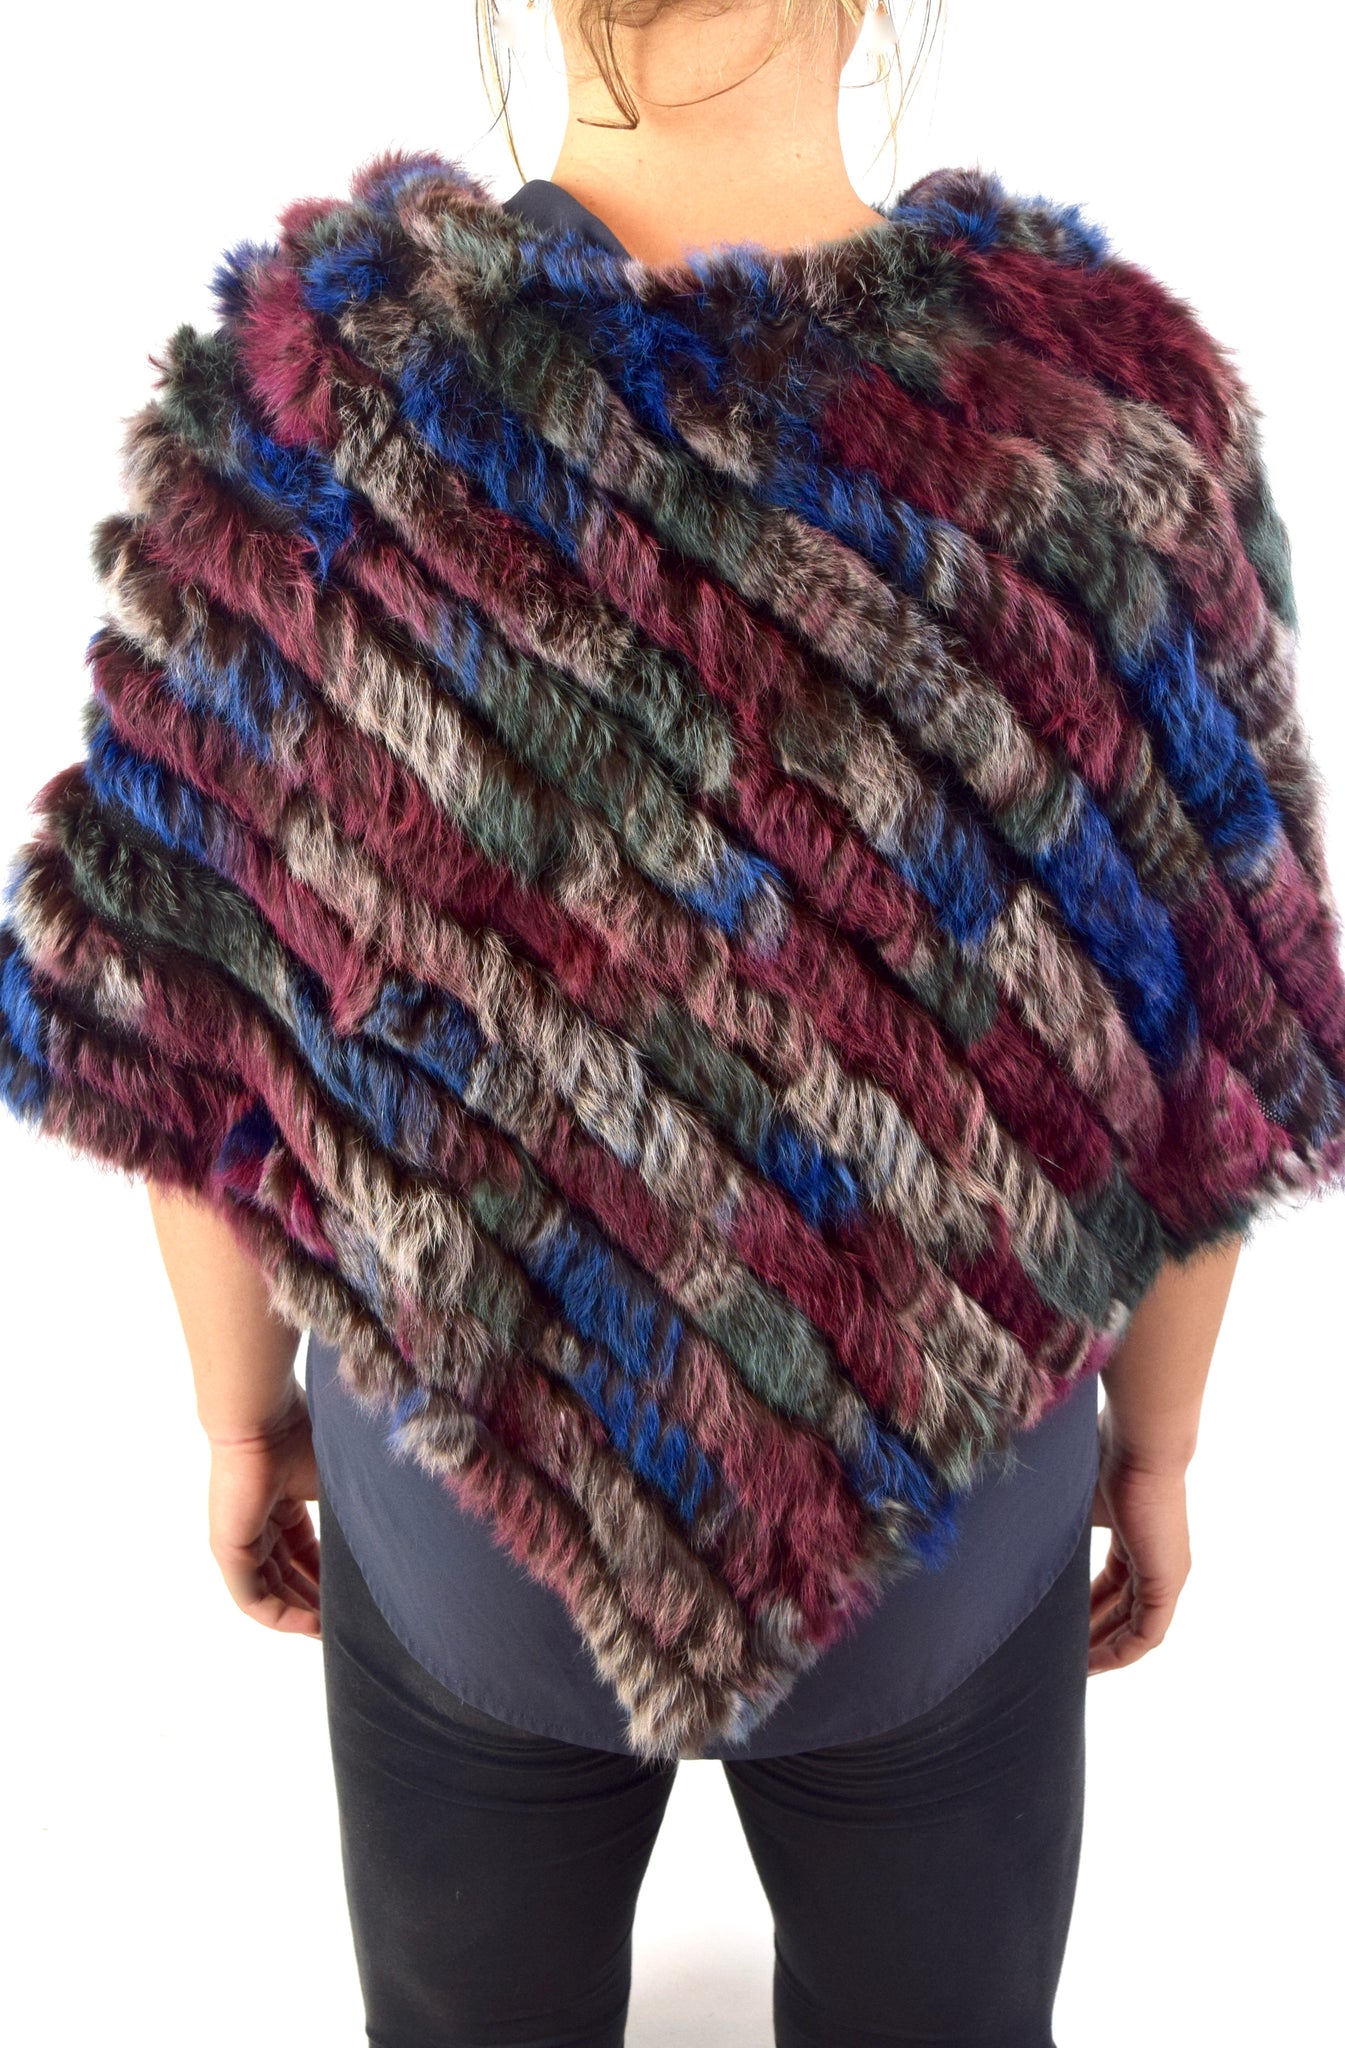 Knitted Rabbit Fur Poncho/Cape (Multi-Colored) Minkas Furs